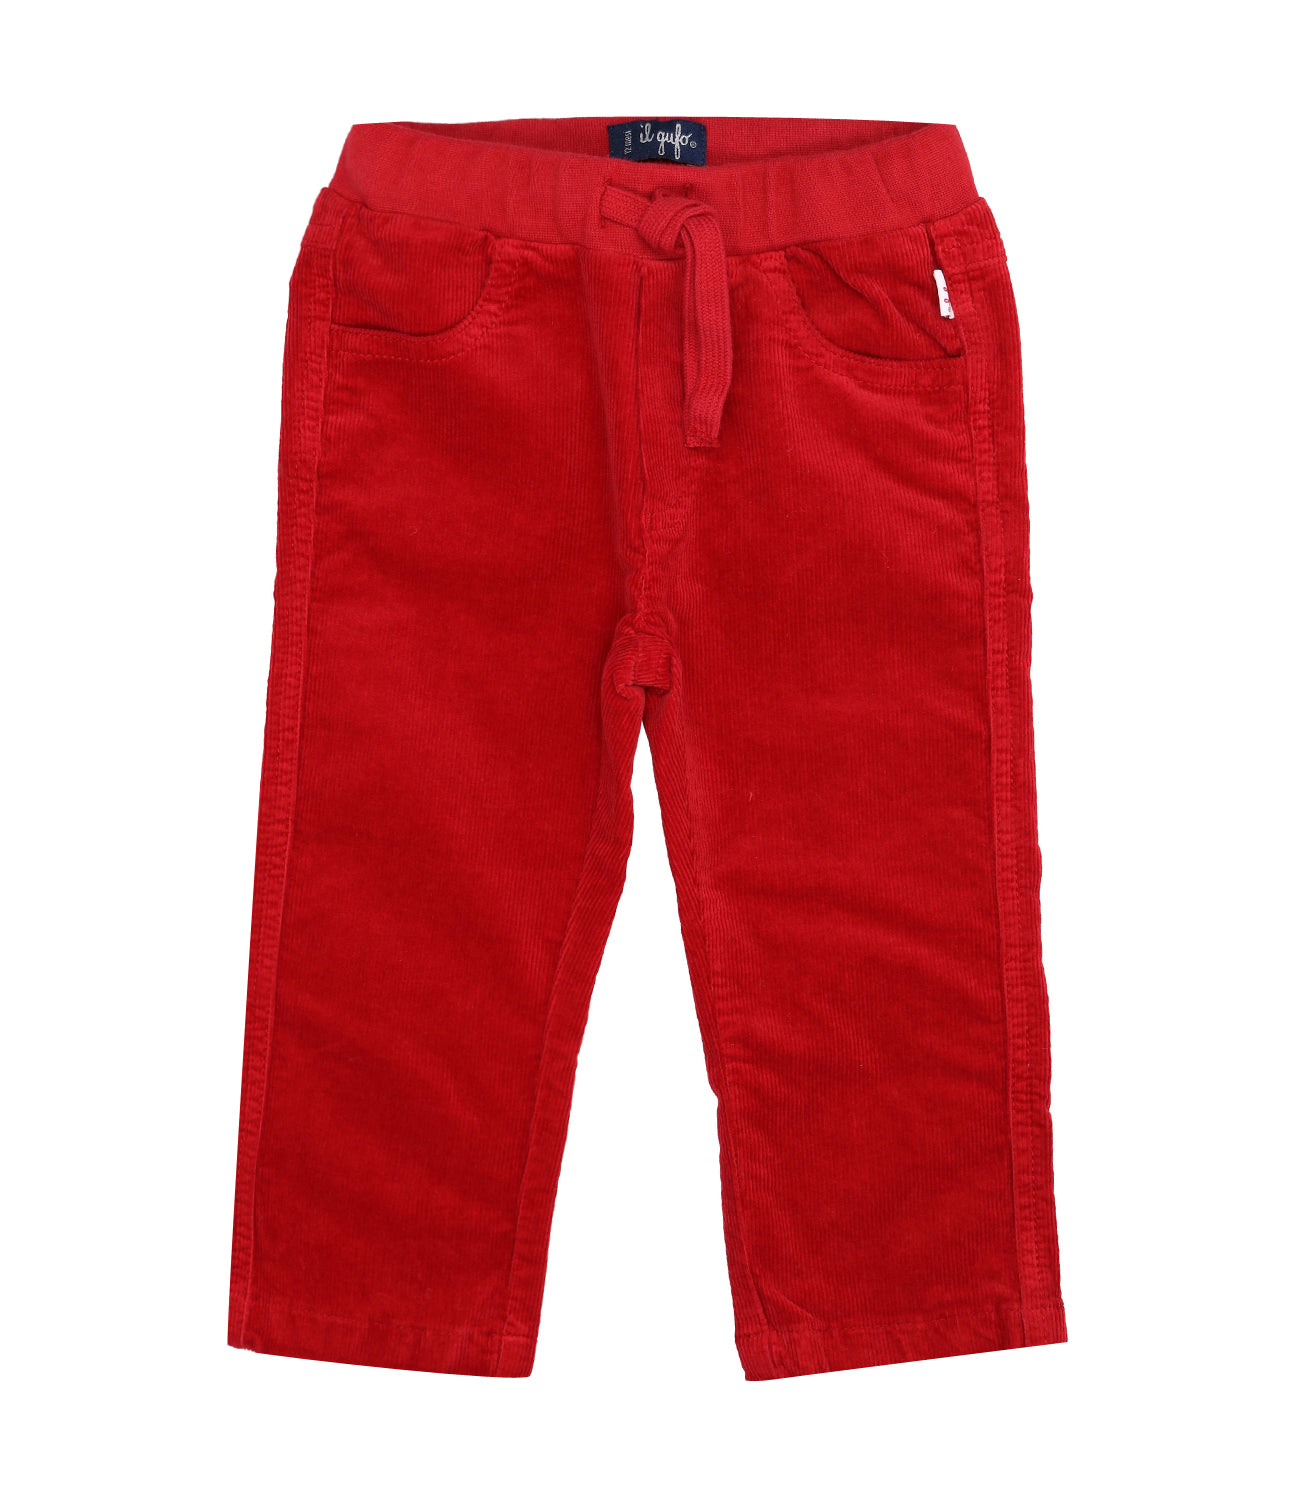 Pantalone Rosso